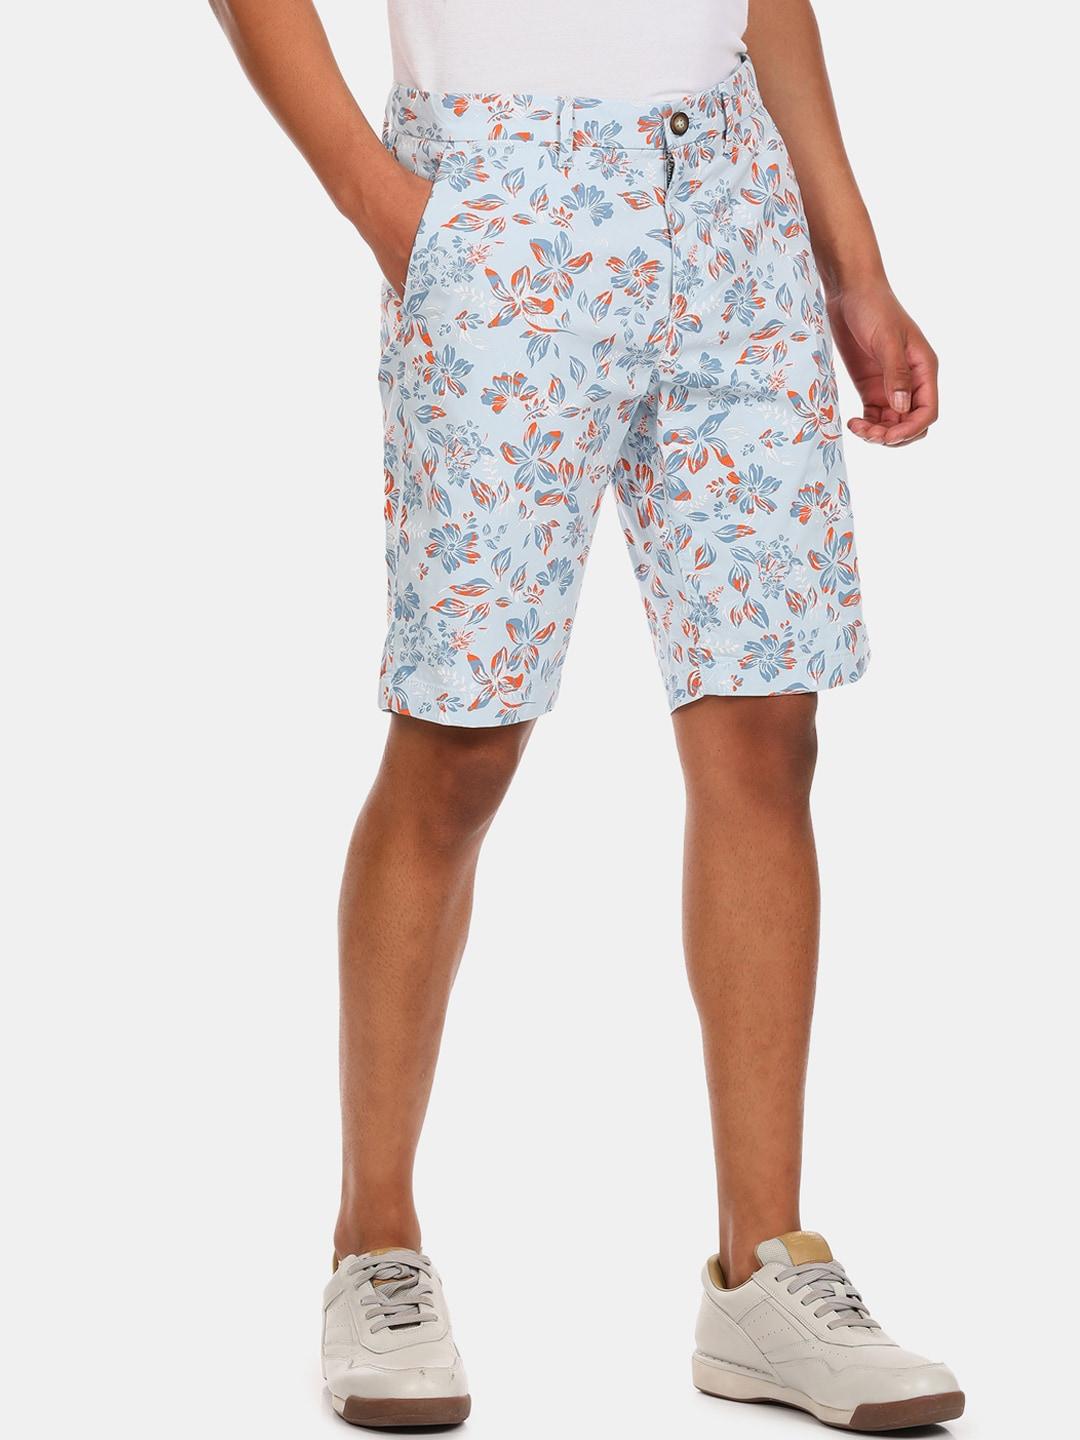 u-s-polo-assn-men-blue-floral-printed-mid-rise-regular-shorts